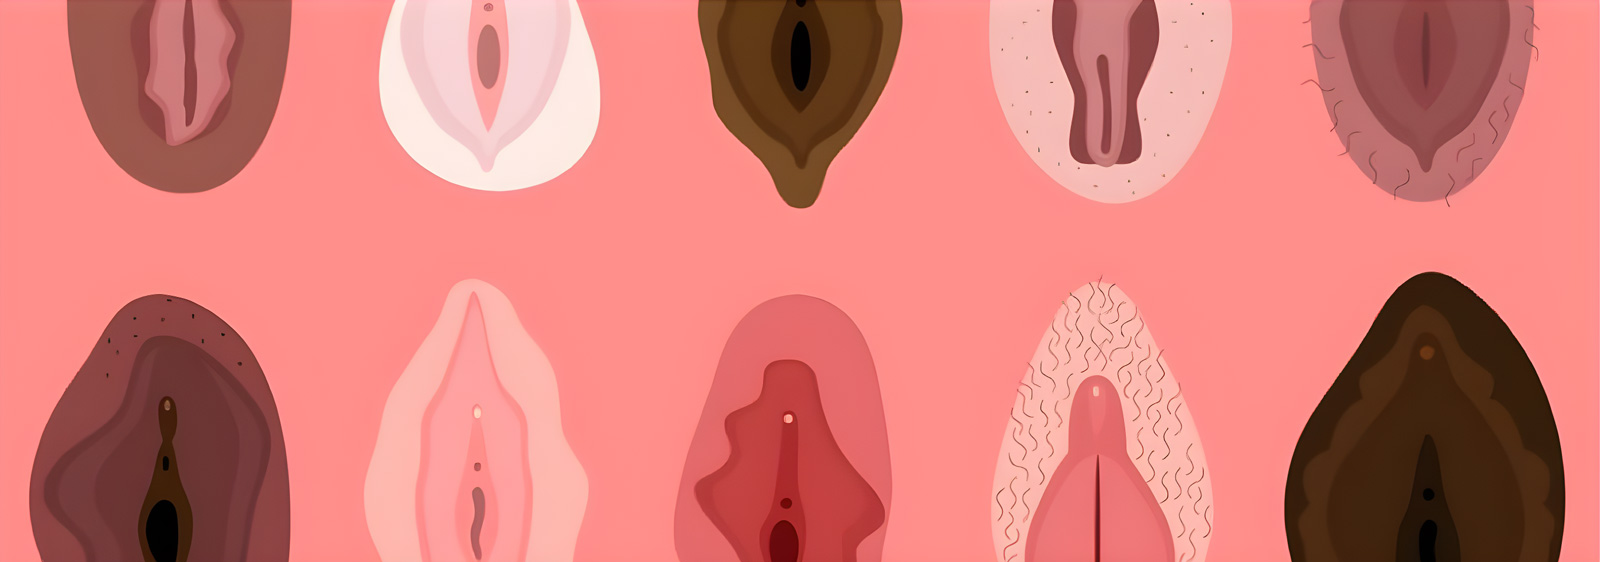 Vagina vs vulva